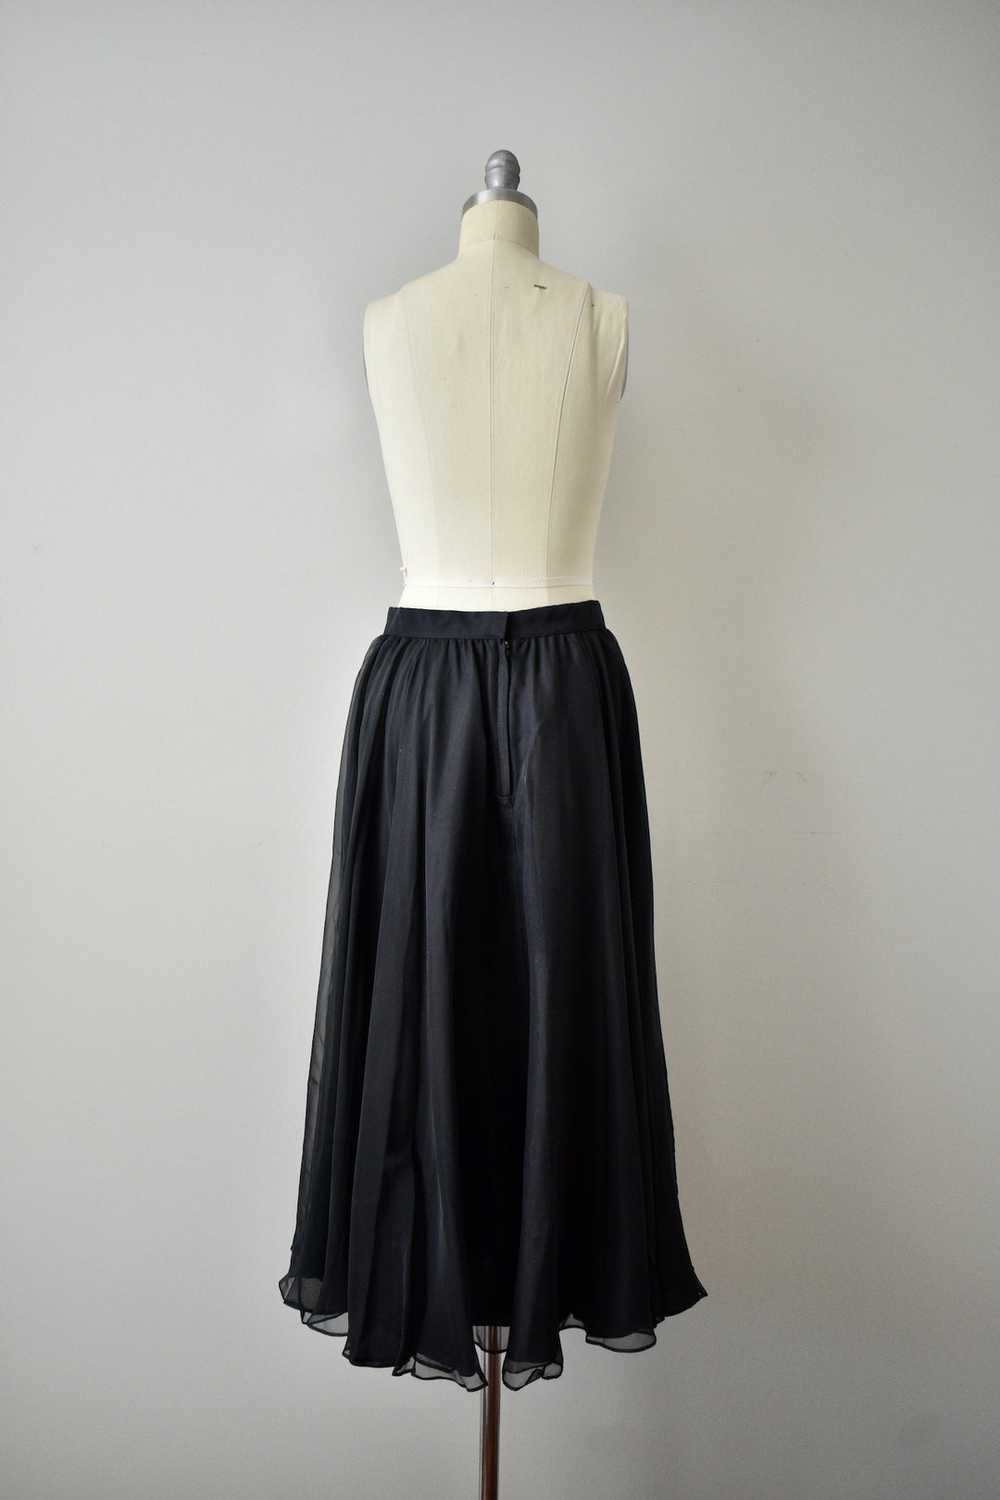 Vintage 1970s Flowy Black Skirt - image 3